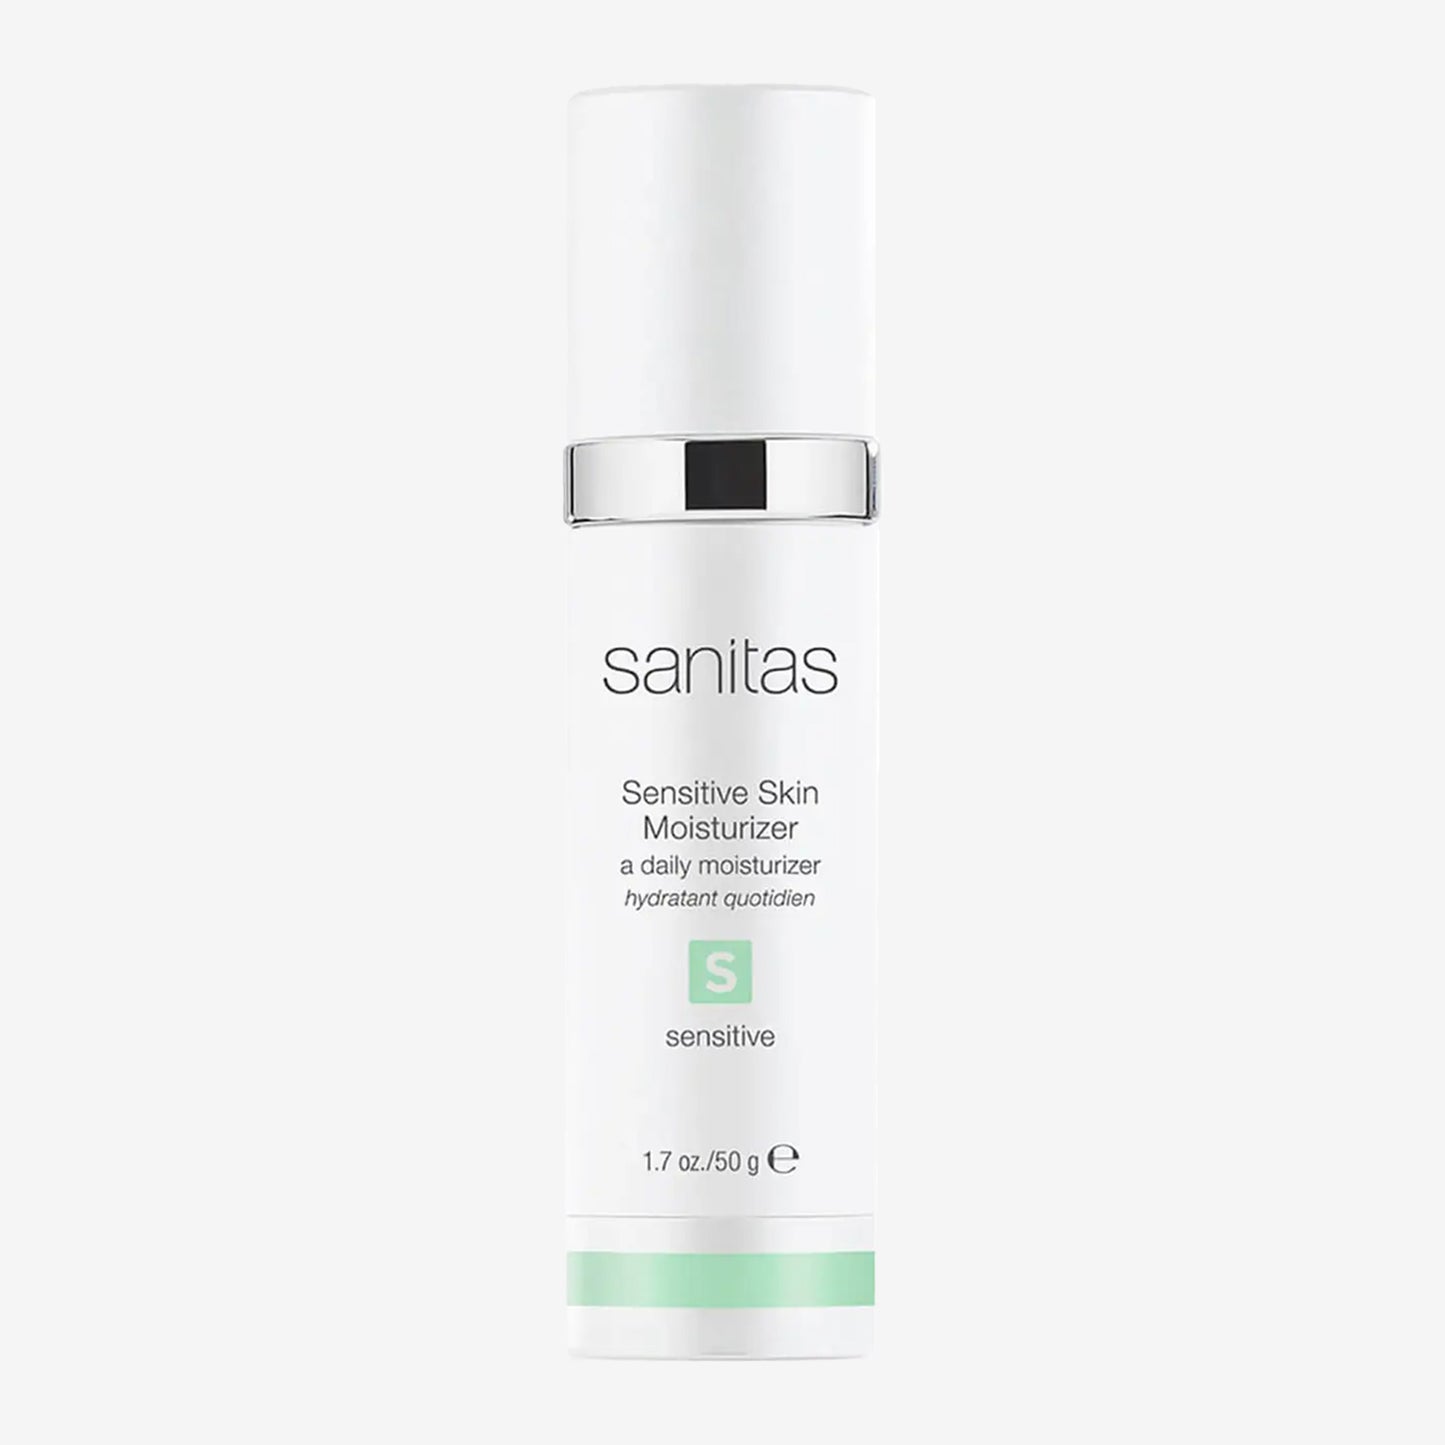 Sanitas Sensitive Skin Moisturizer